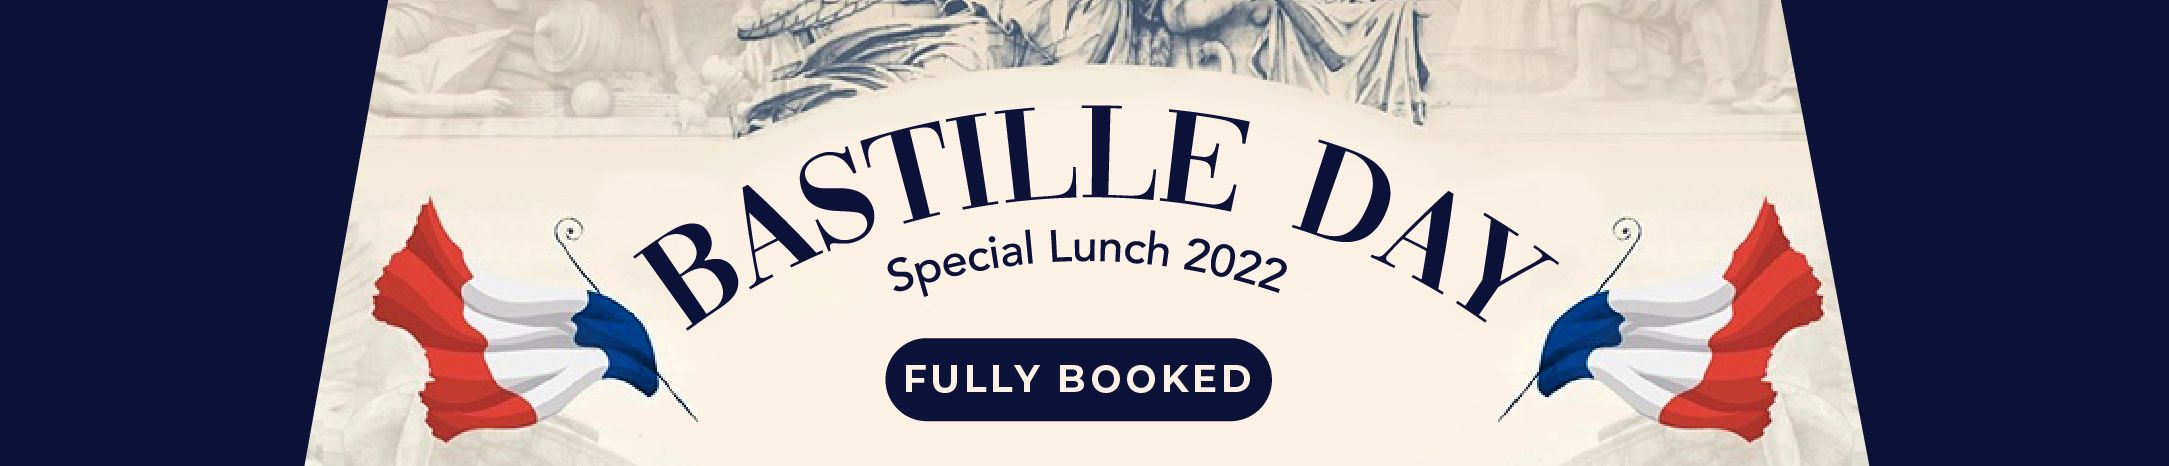 Bastille Day lunch event